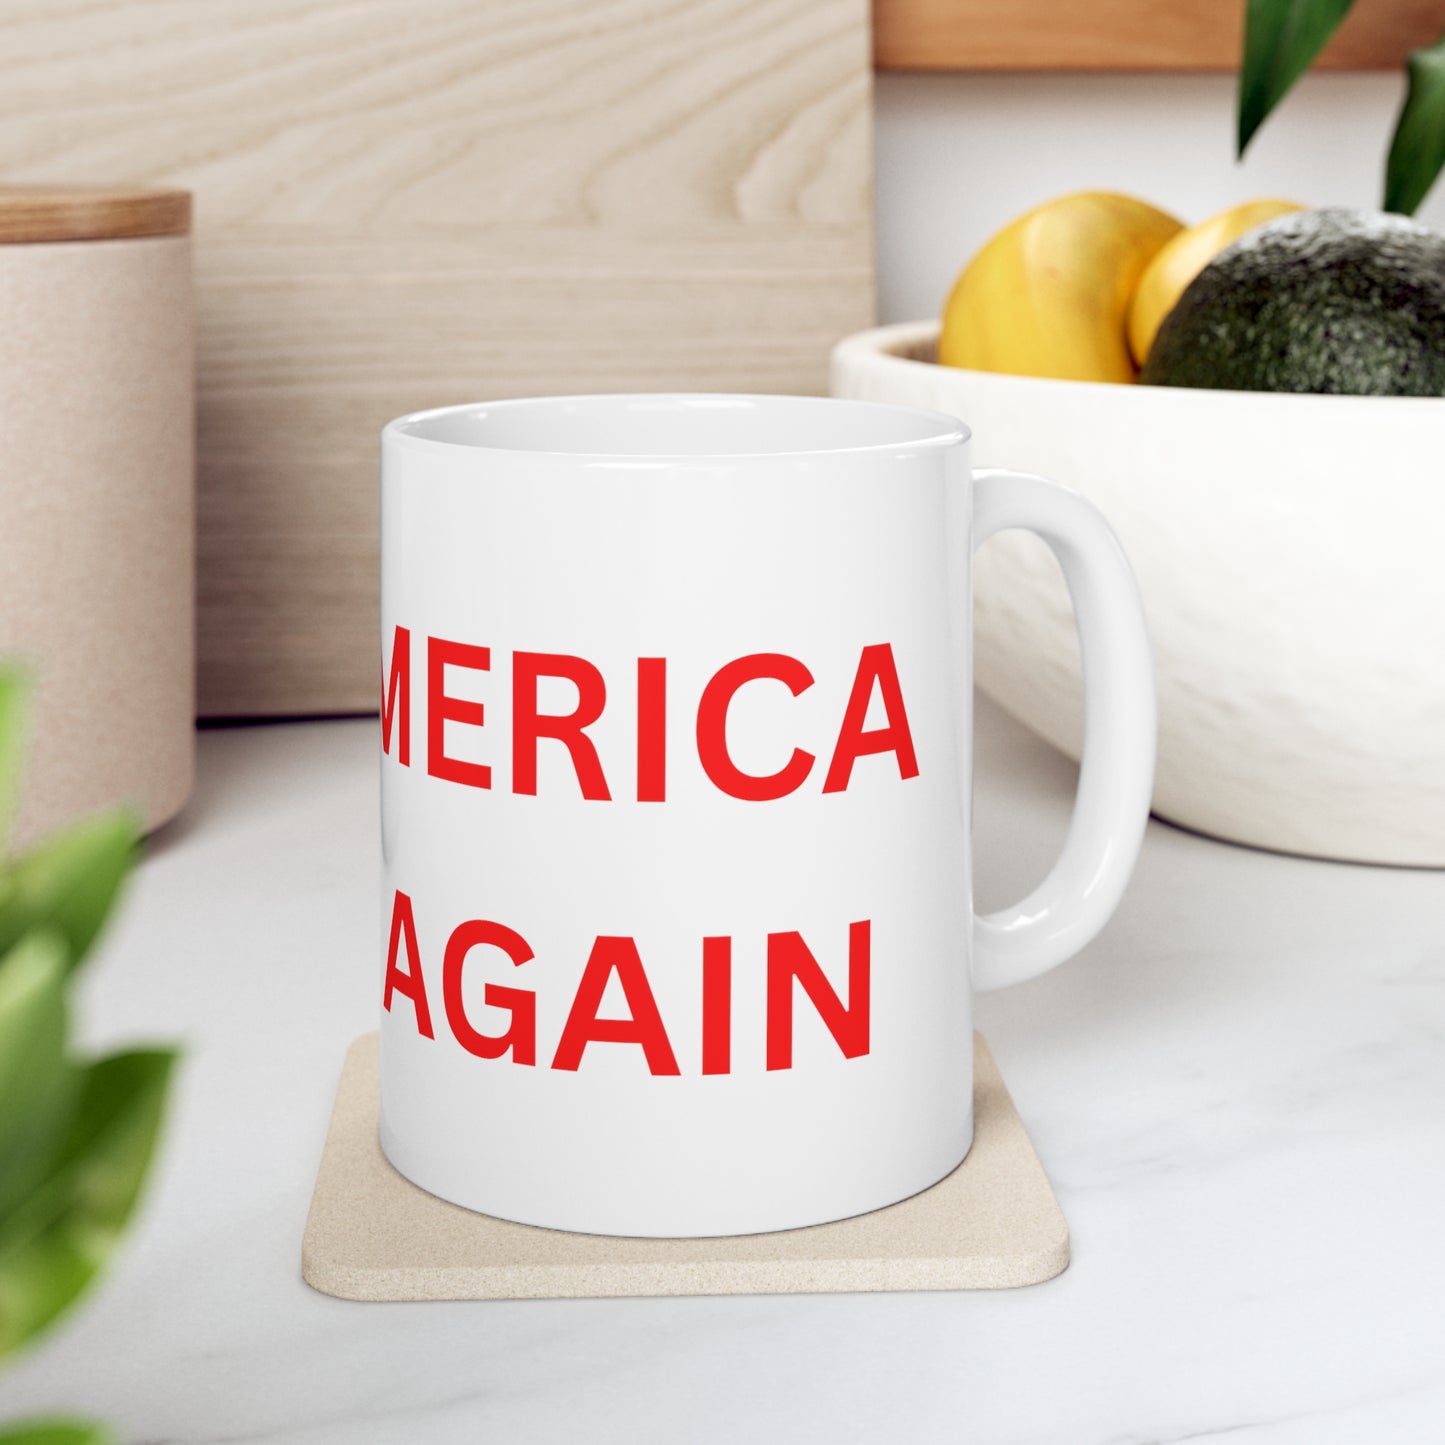 Ceramic Mug 11oz - Make America Young Again™